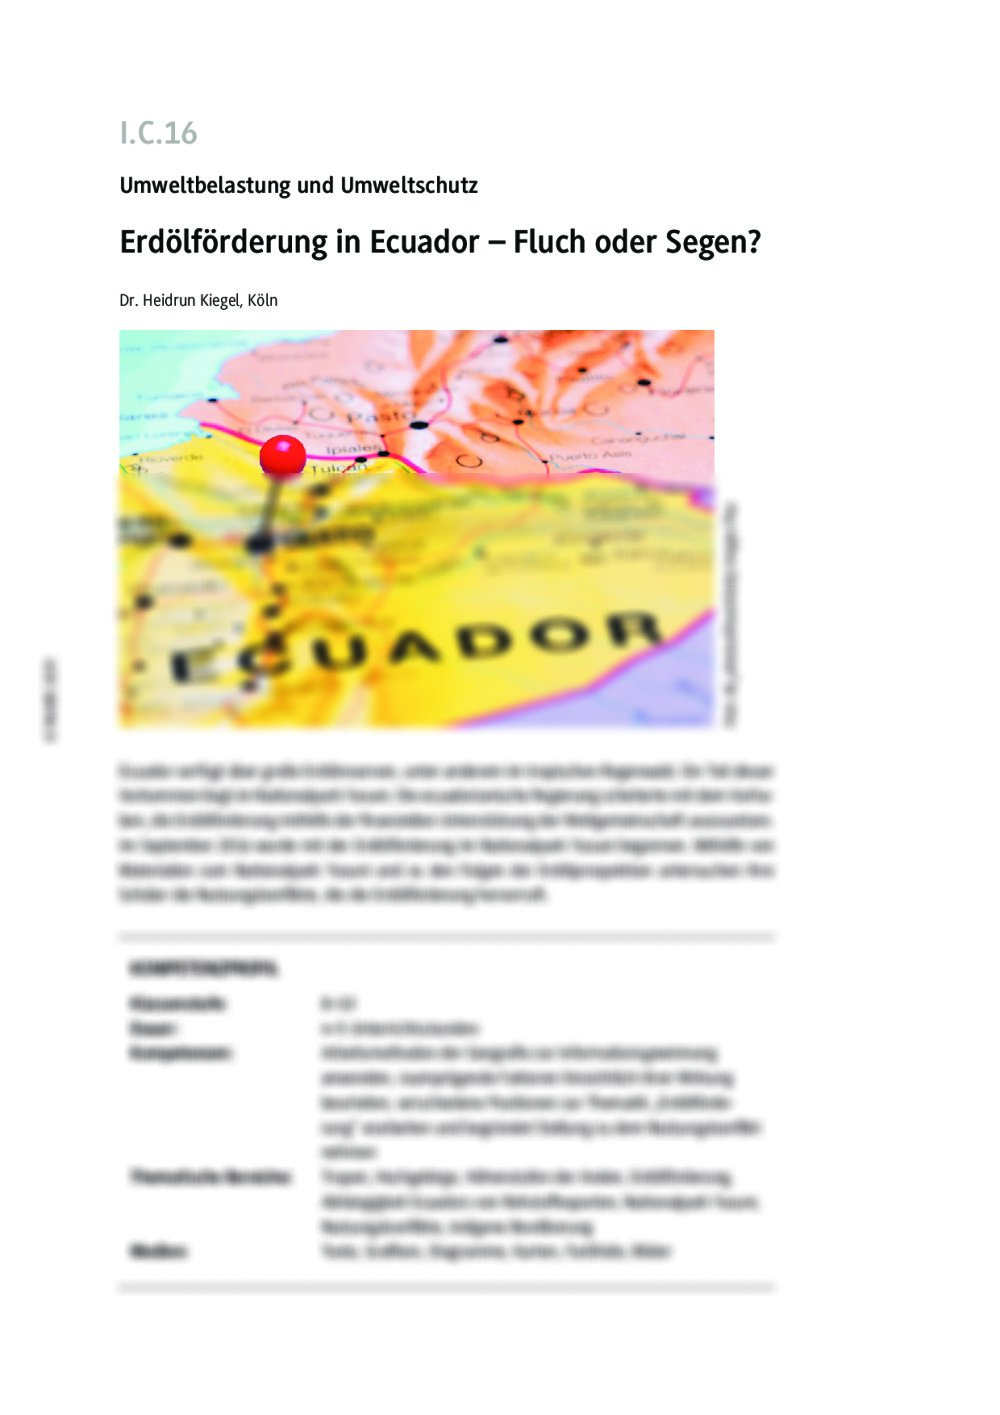 Erdölförderung in Ecuador - Seite 1